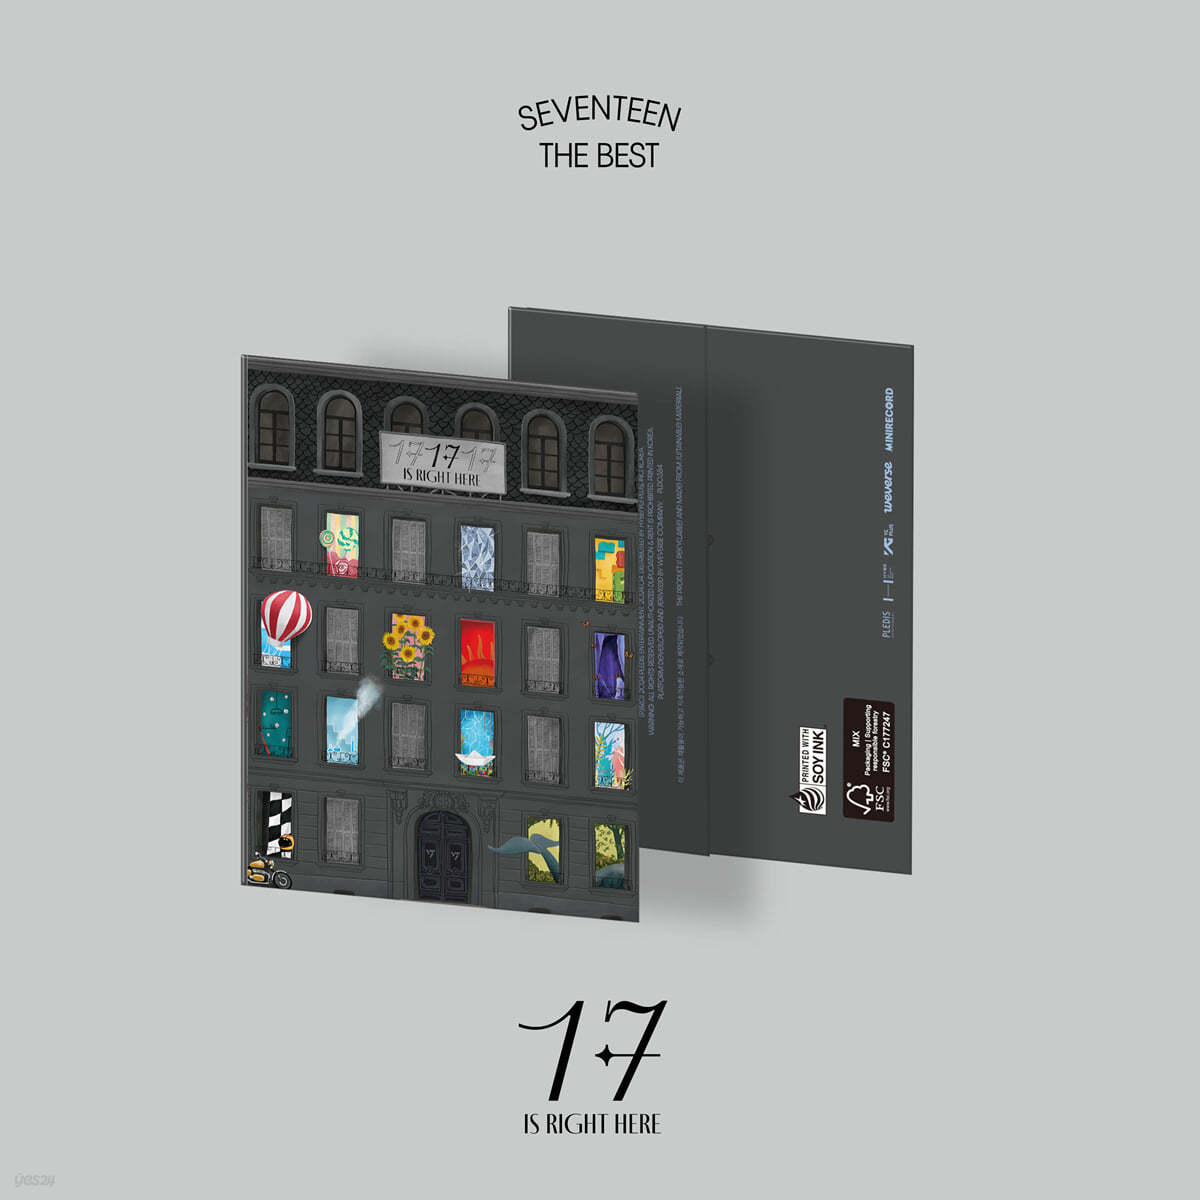 SEVENTEEN BEST ALBUM – 17 IS RIGHT HERE (Weverse Albums Ver.)